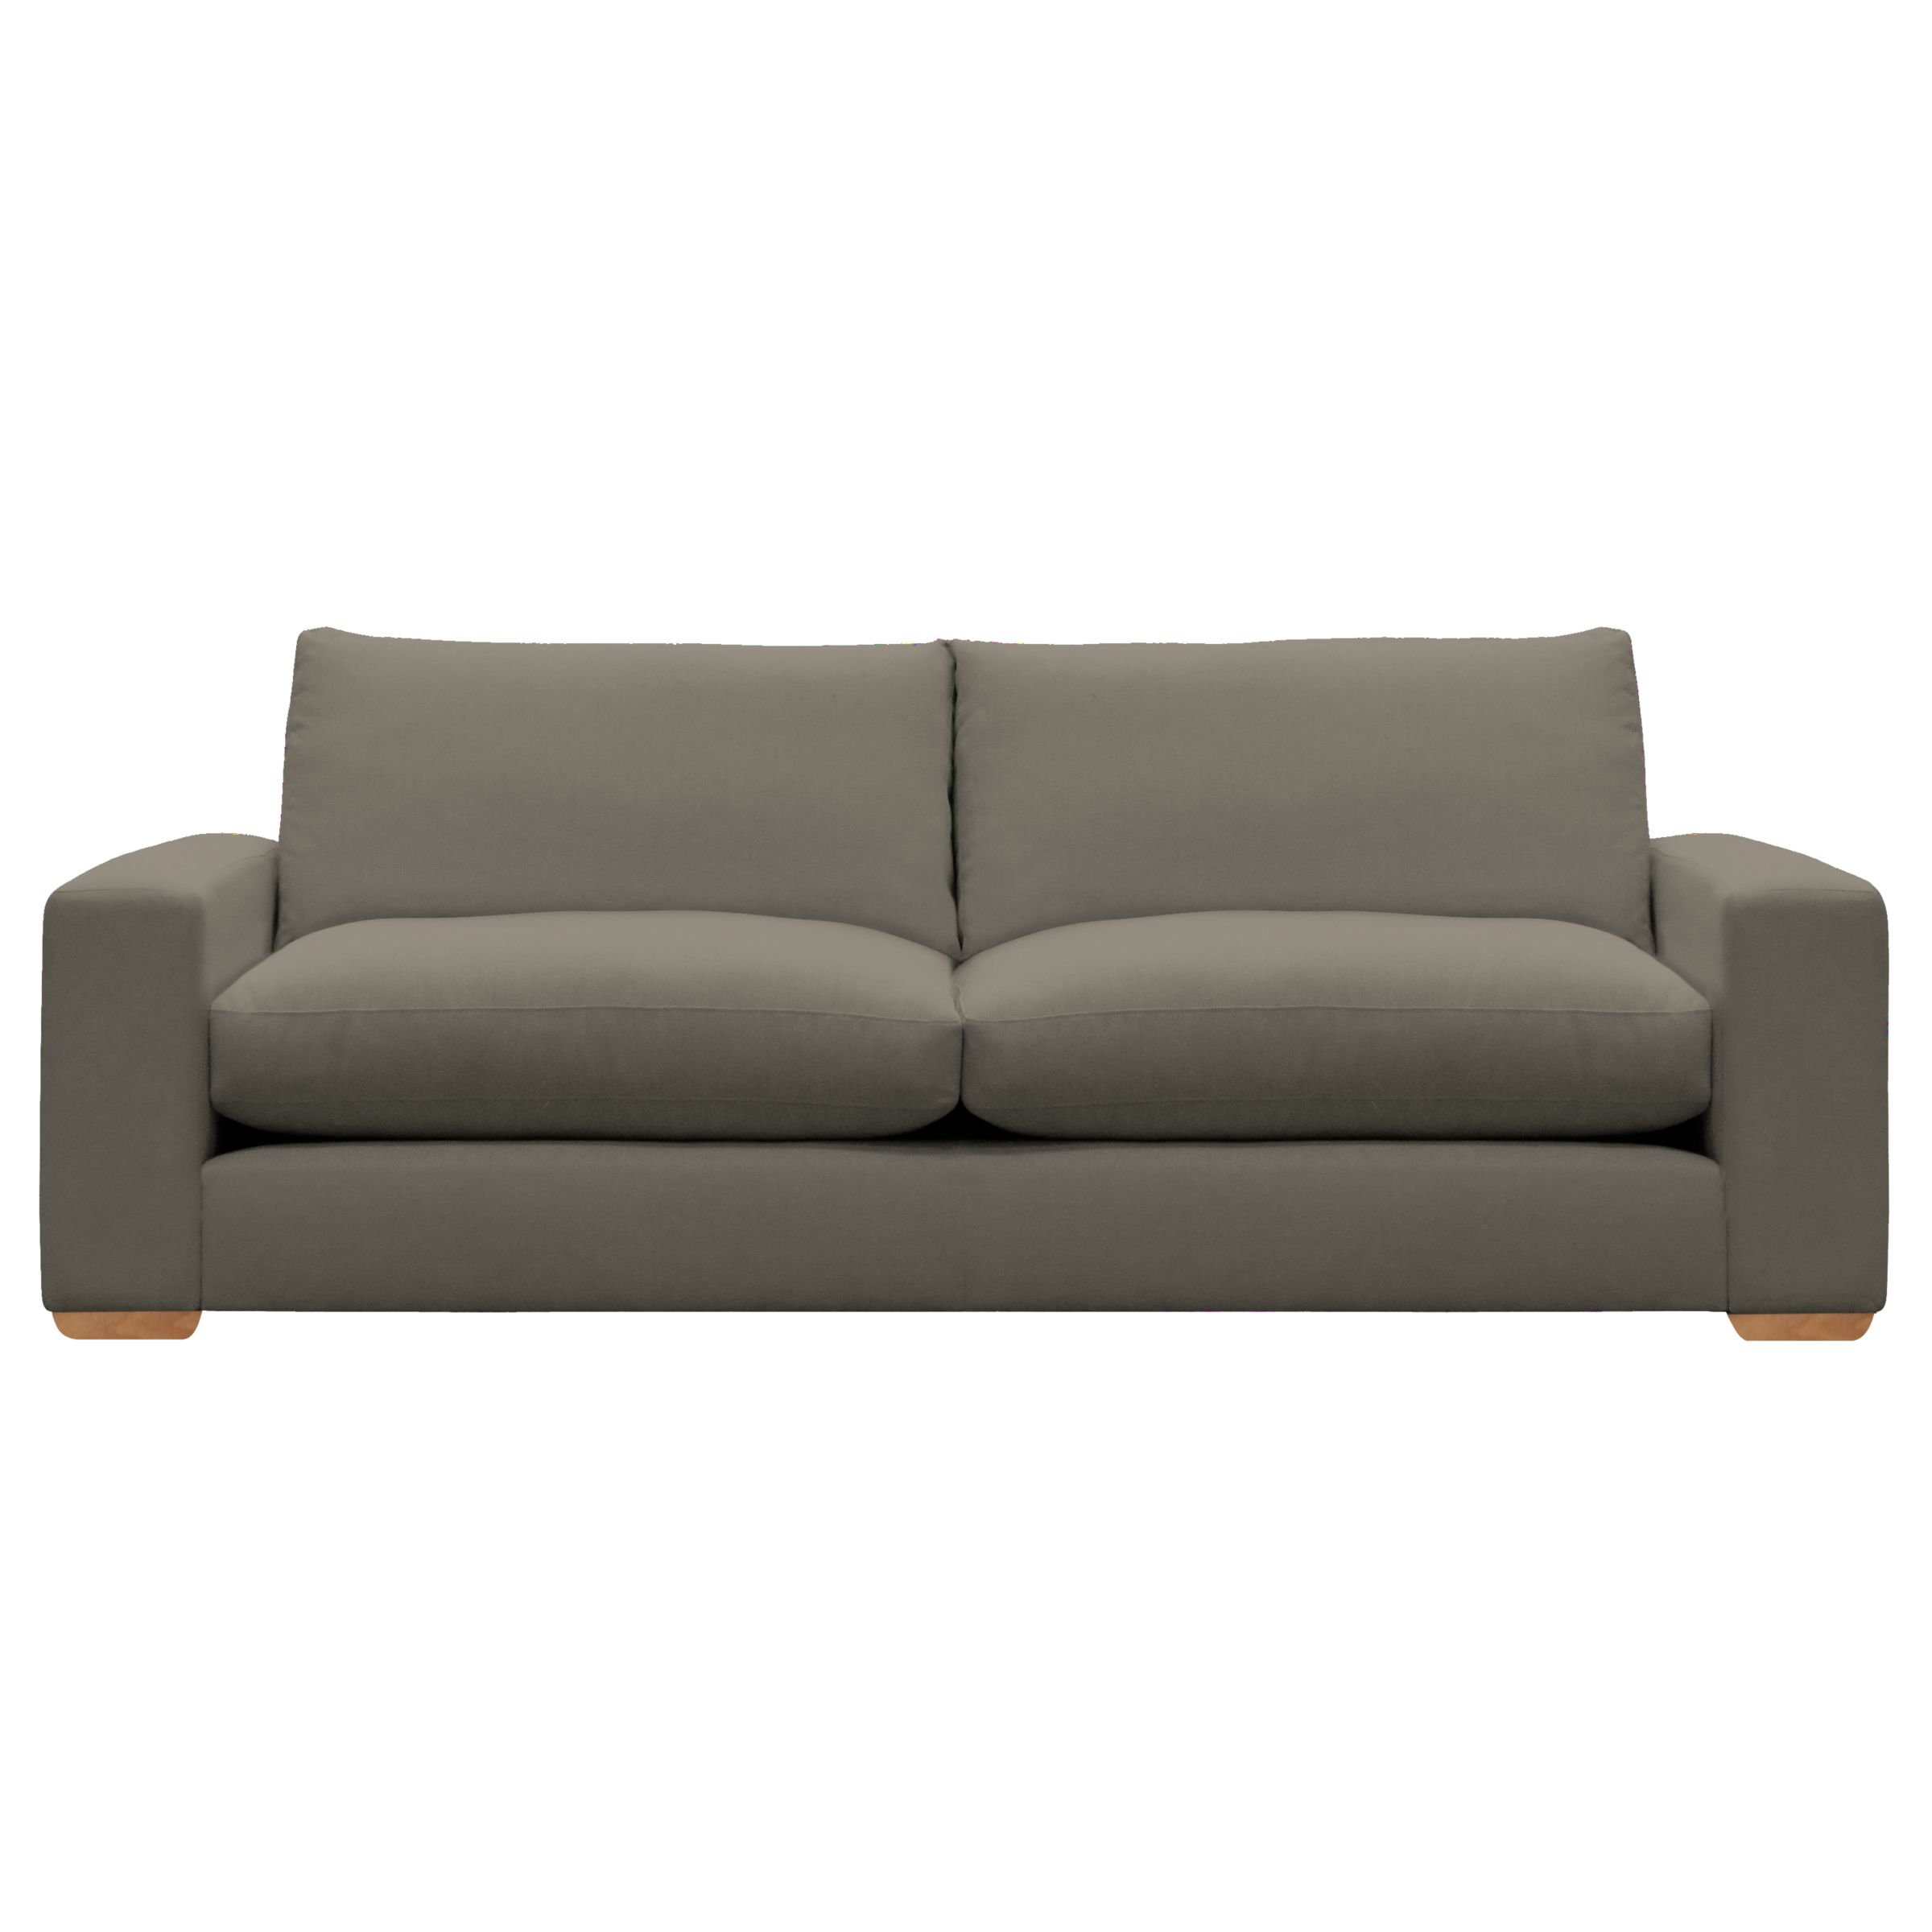 John Lewis Options Wide Arm Grand Sofa, Linley Slate, width 225cm